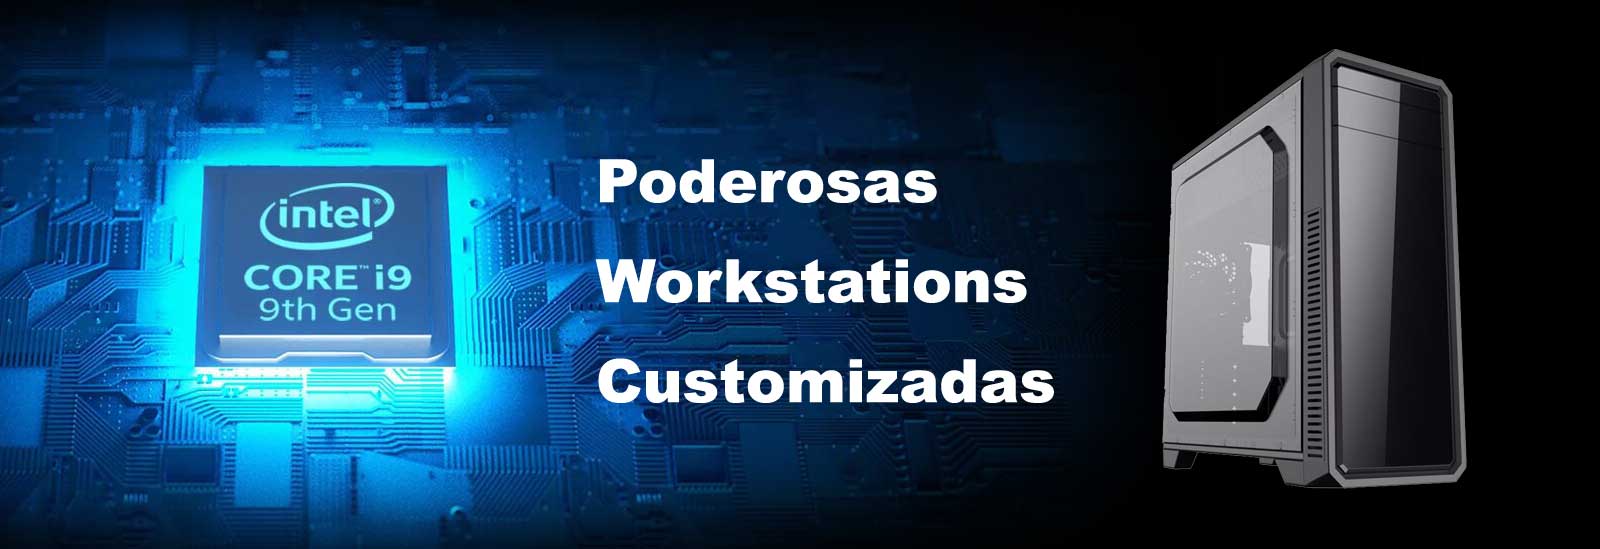 Workstation Poderosas